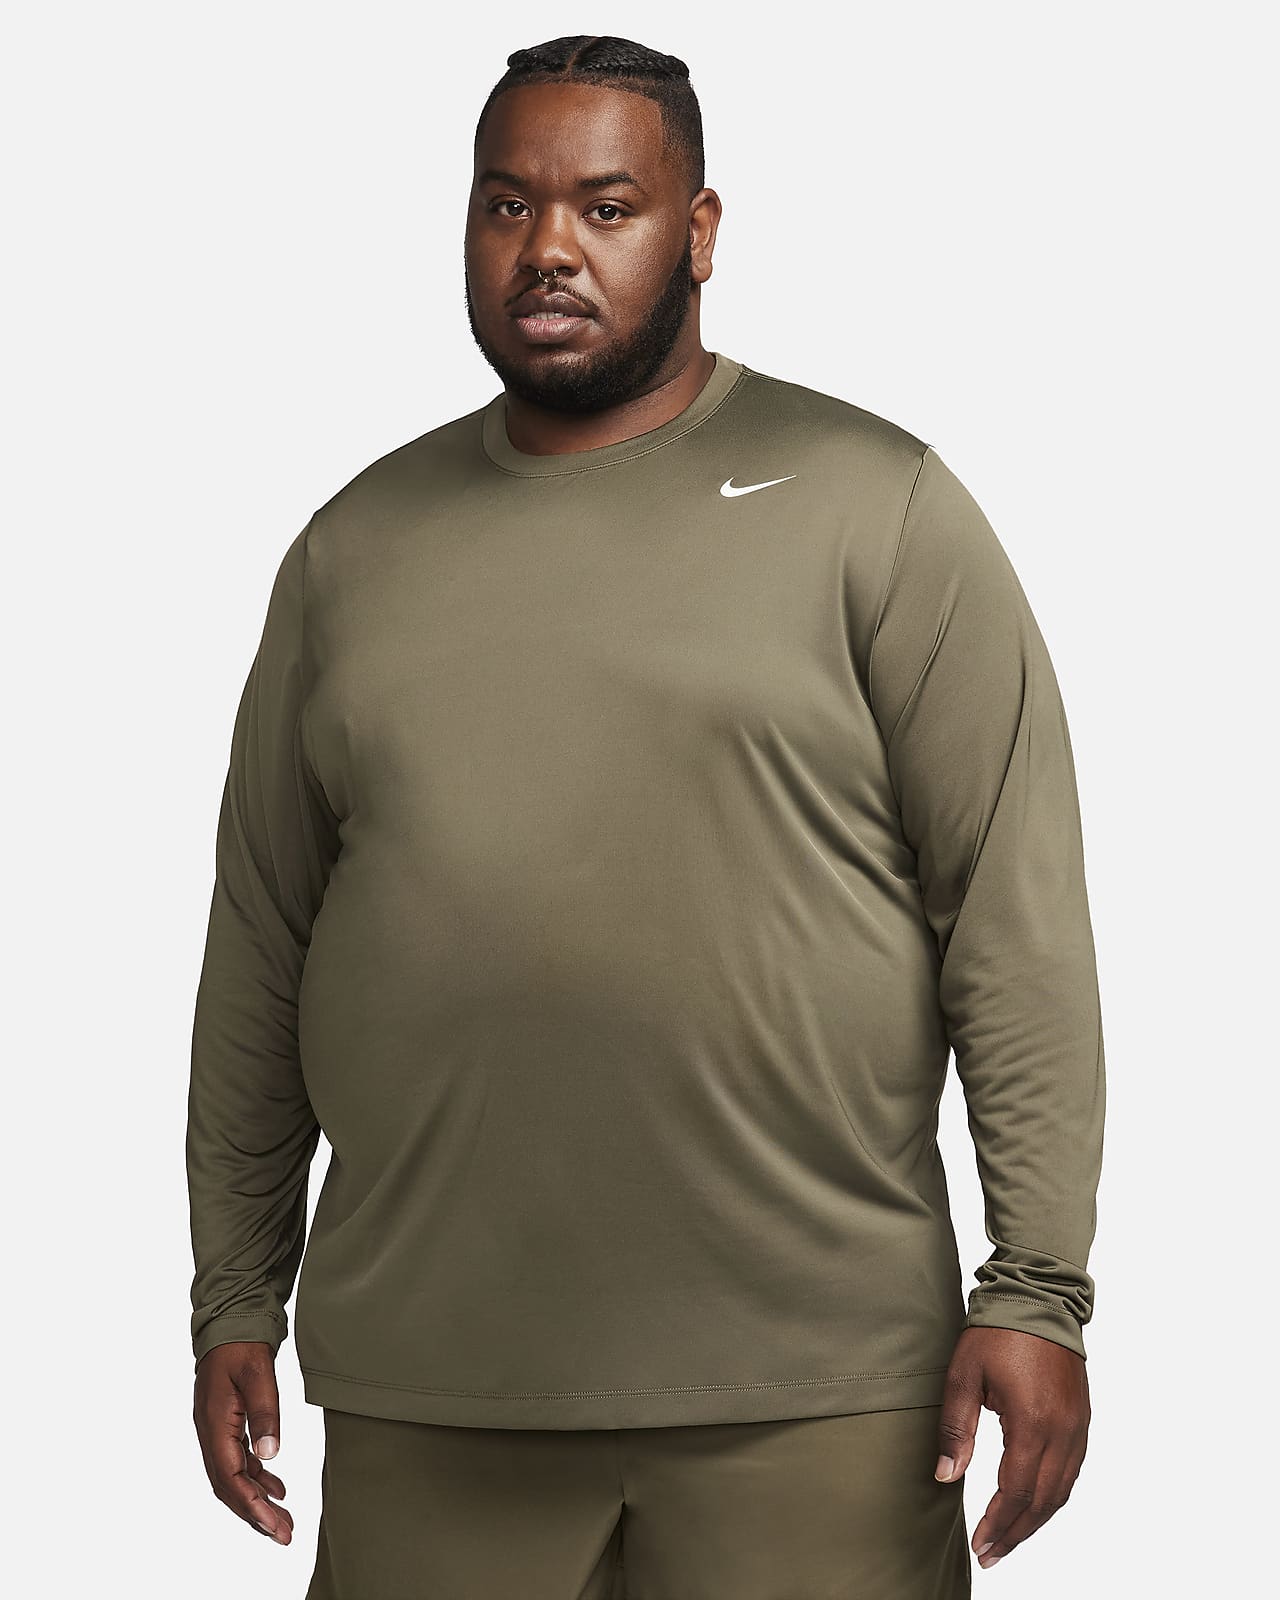 Nike Women's DriFit Legend Long Sleeve Tshirt : : Clothing, Shoes  & Accessories